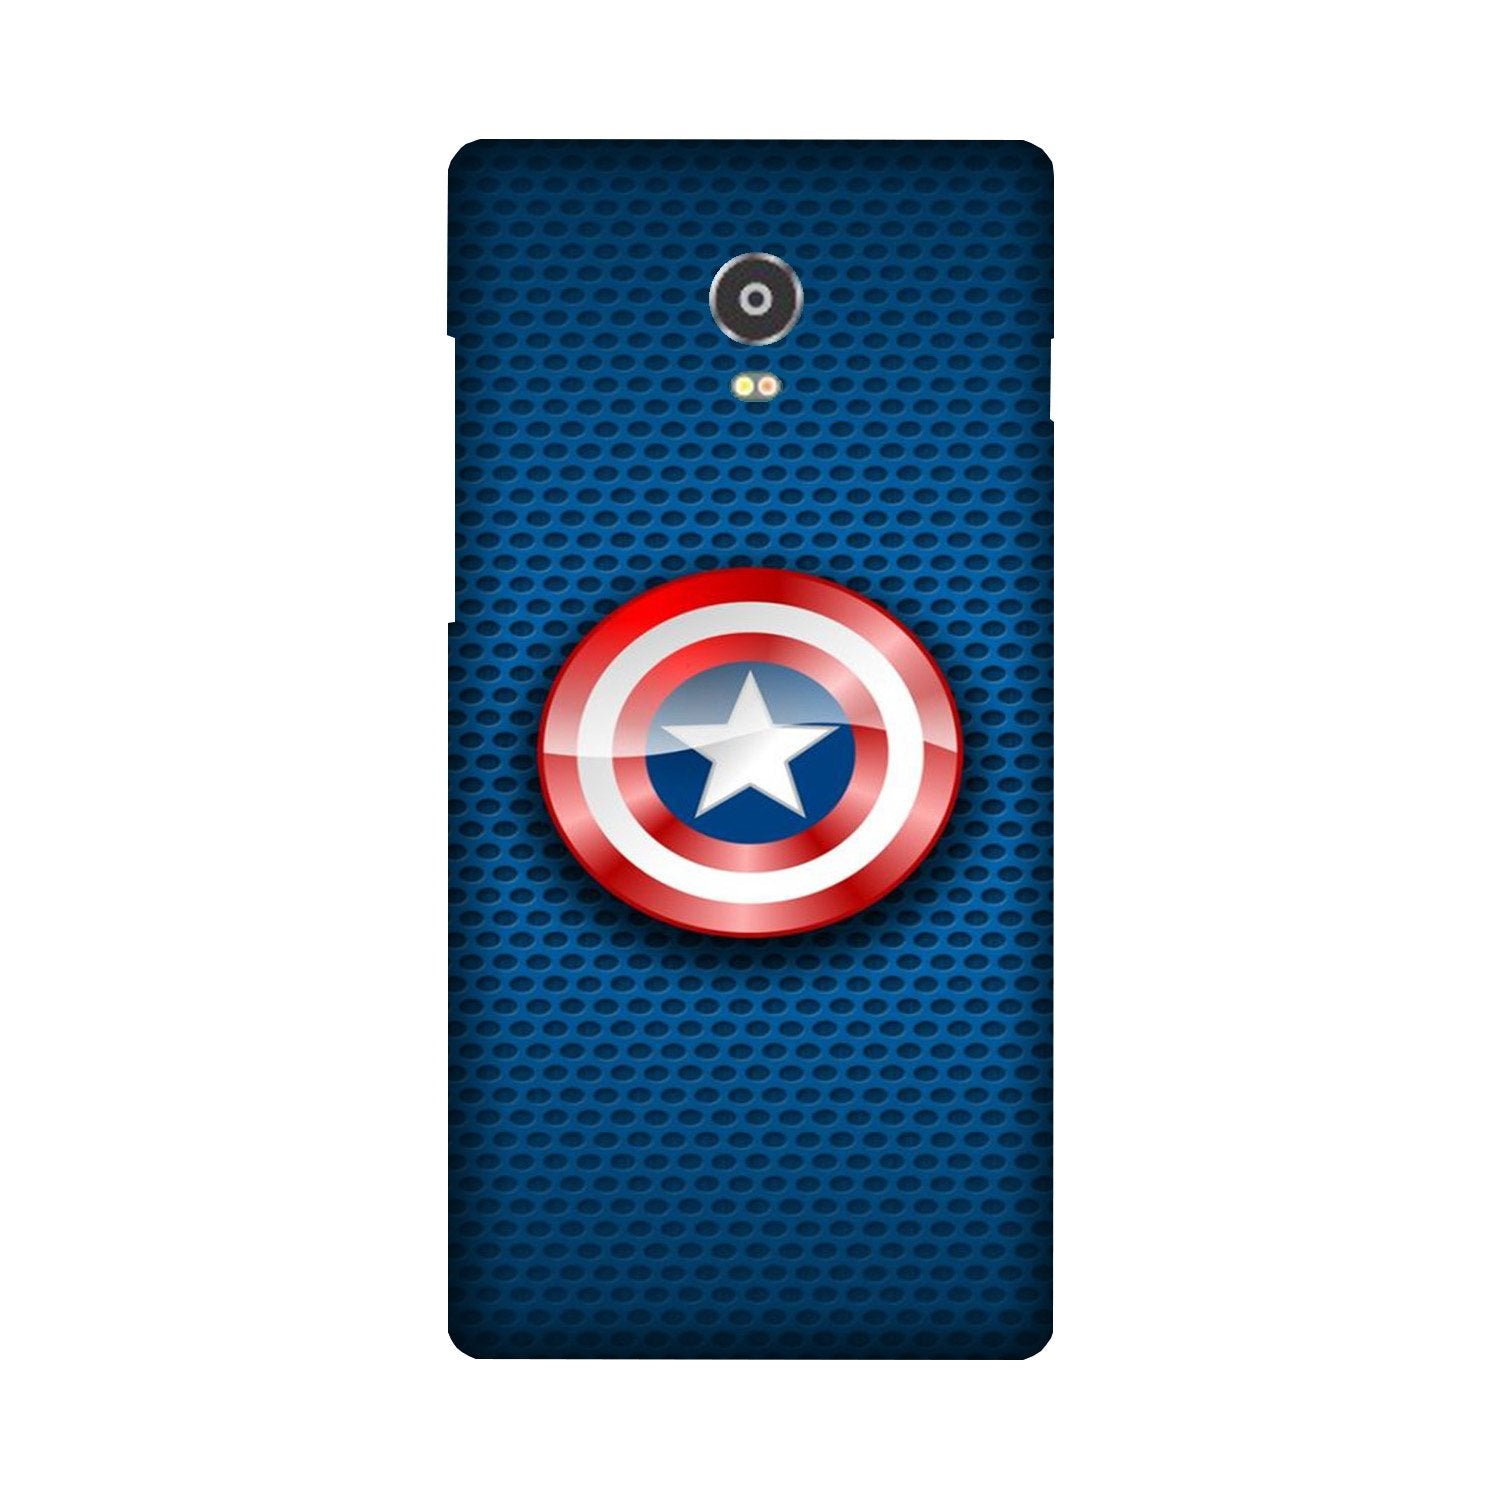 Captain America Shield Case for Lenovo Vibe P1 (Design No. 253)